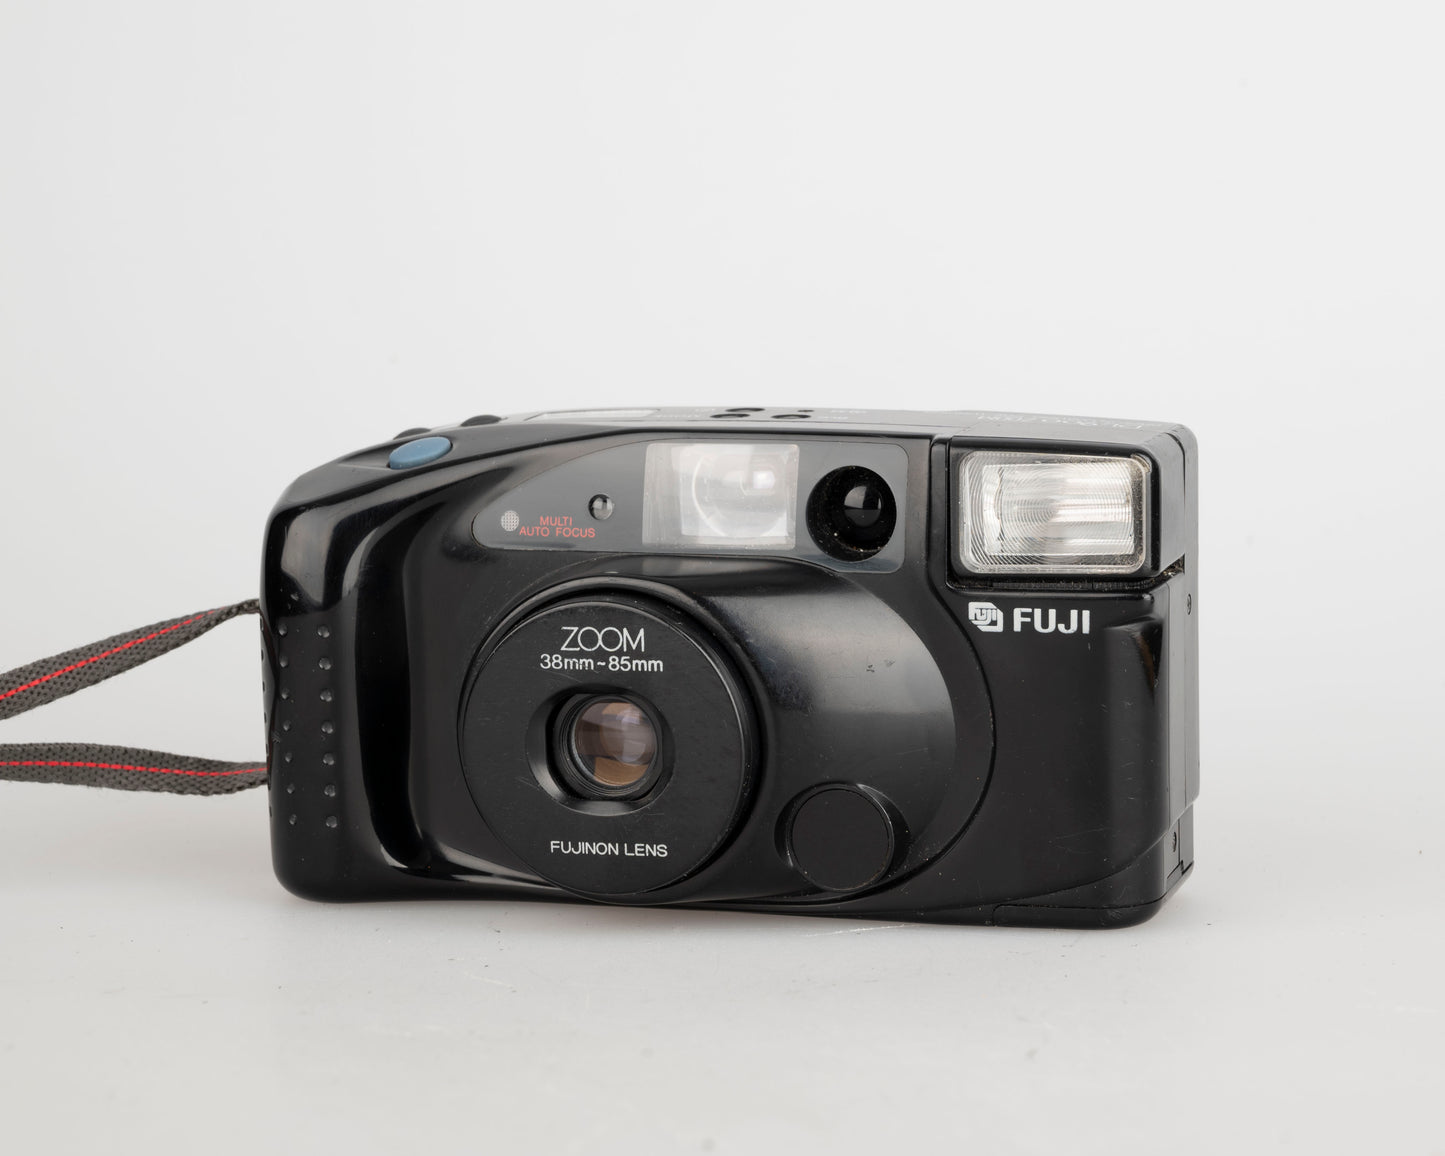 Fuji DL-900 Zoom 35mm camera w/ case (serial 71107474)